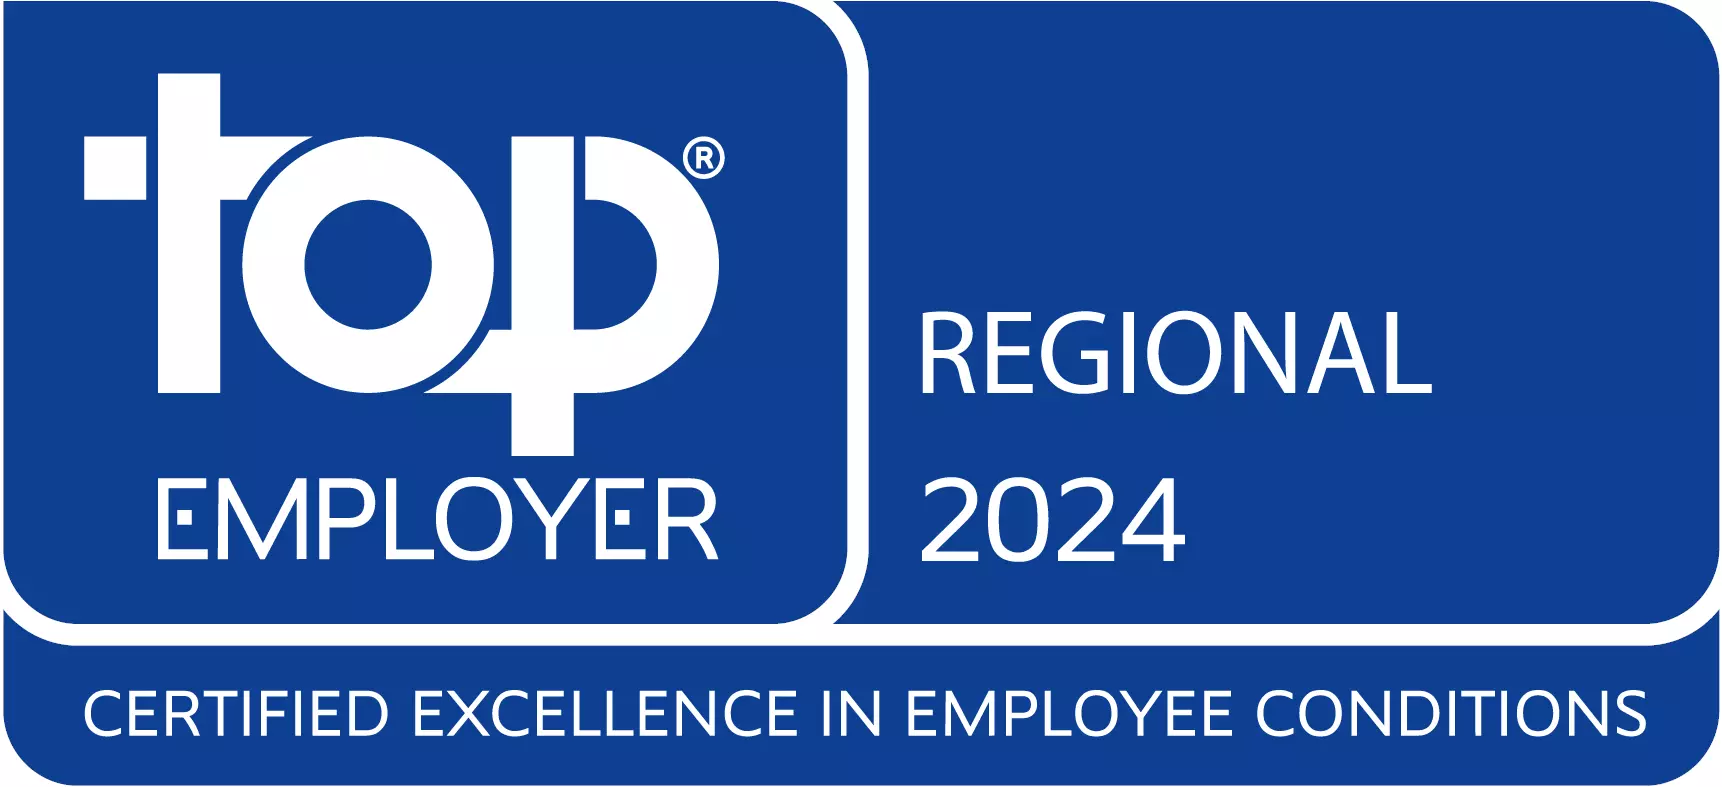 Top_Employer_Regional_2024.png